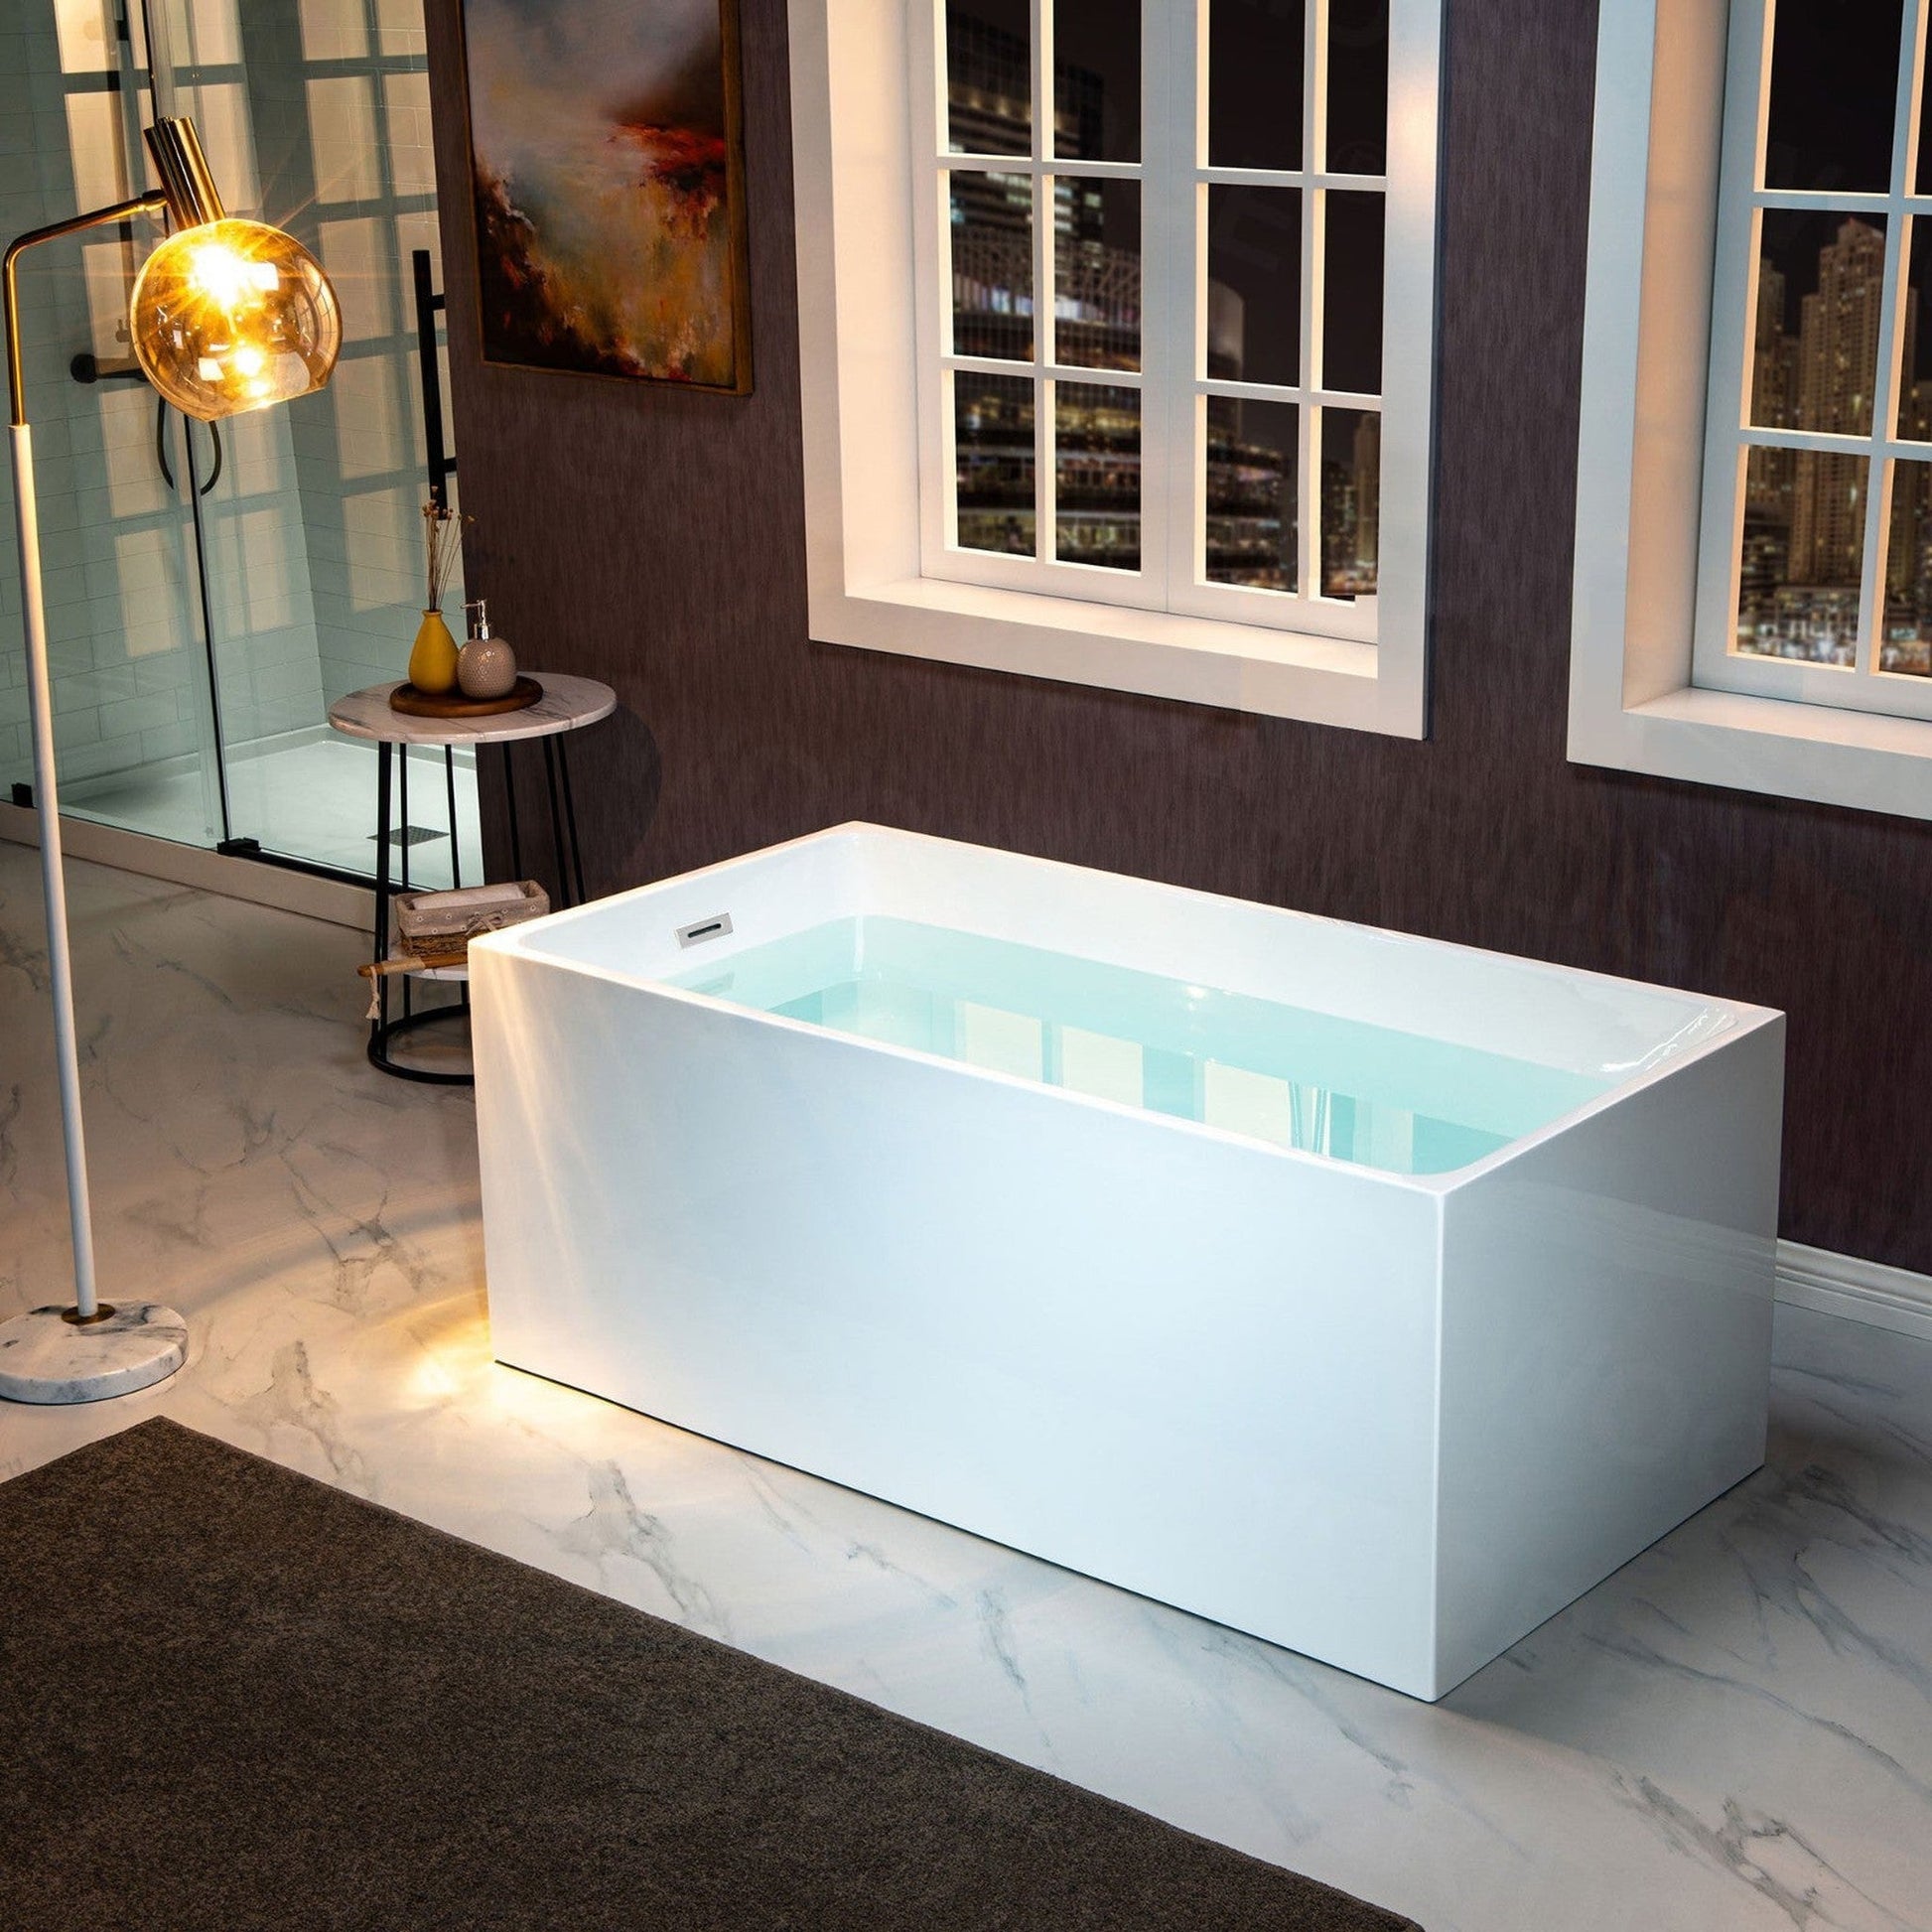 WoodBridge B-0086 67" White Acrylic Freestanding Soaking Bathtub With Chrome Drain, Overflow, F0071CHVT Tub Filler and Caddy Tray